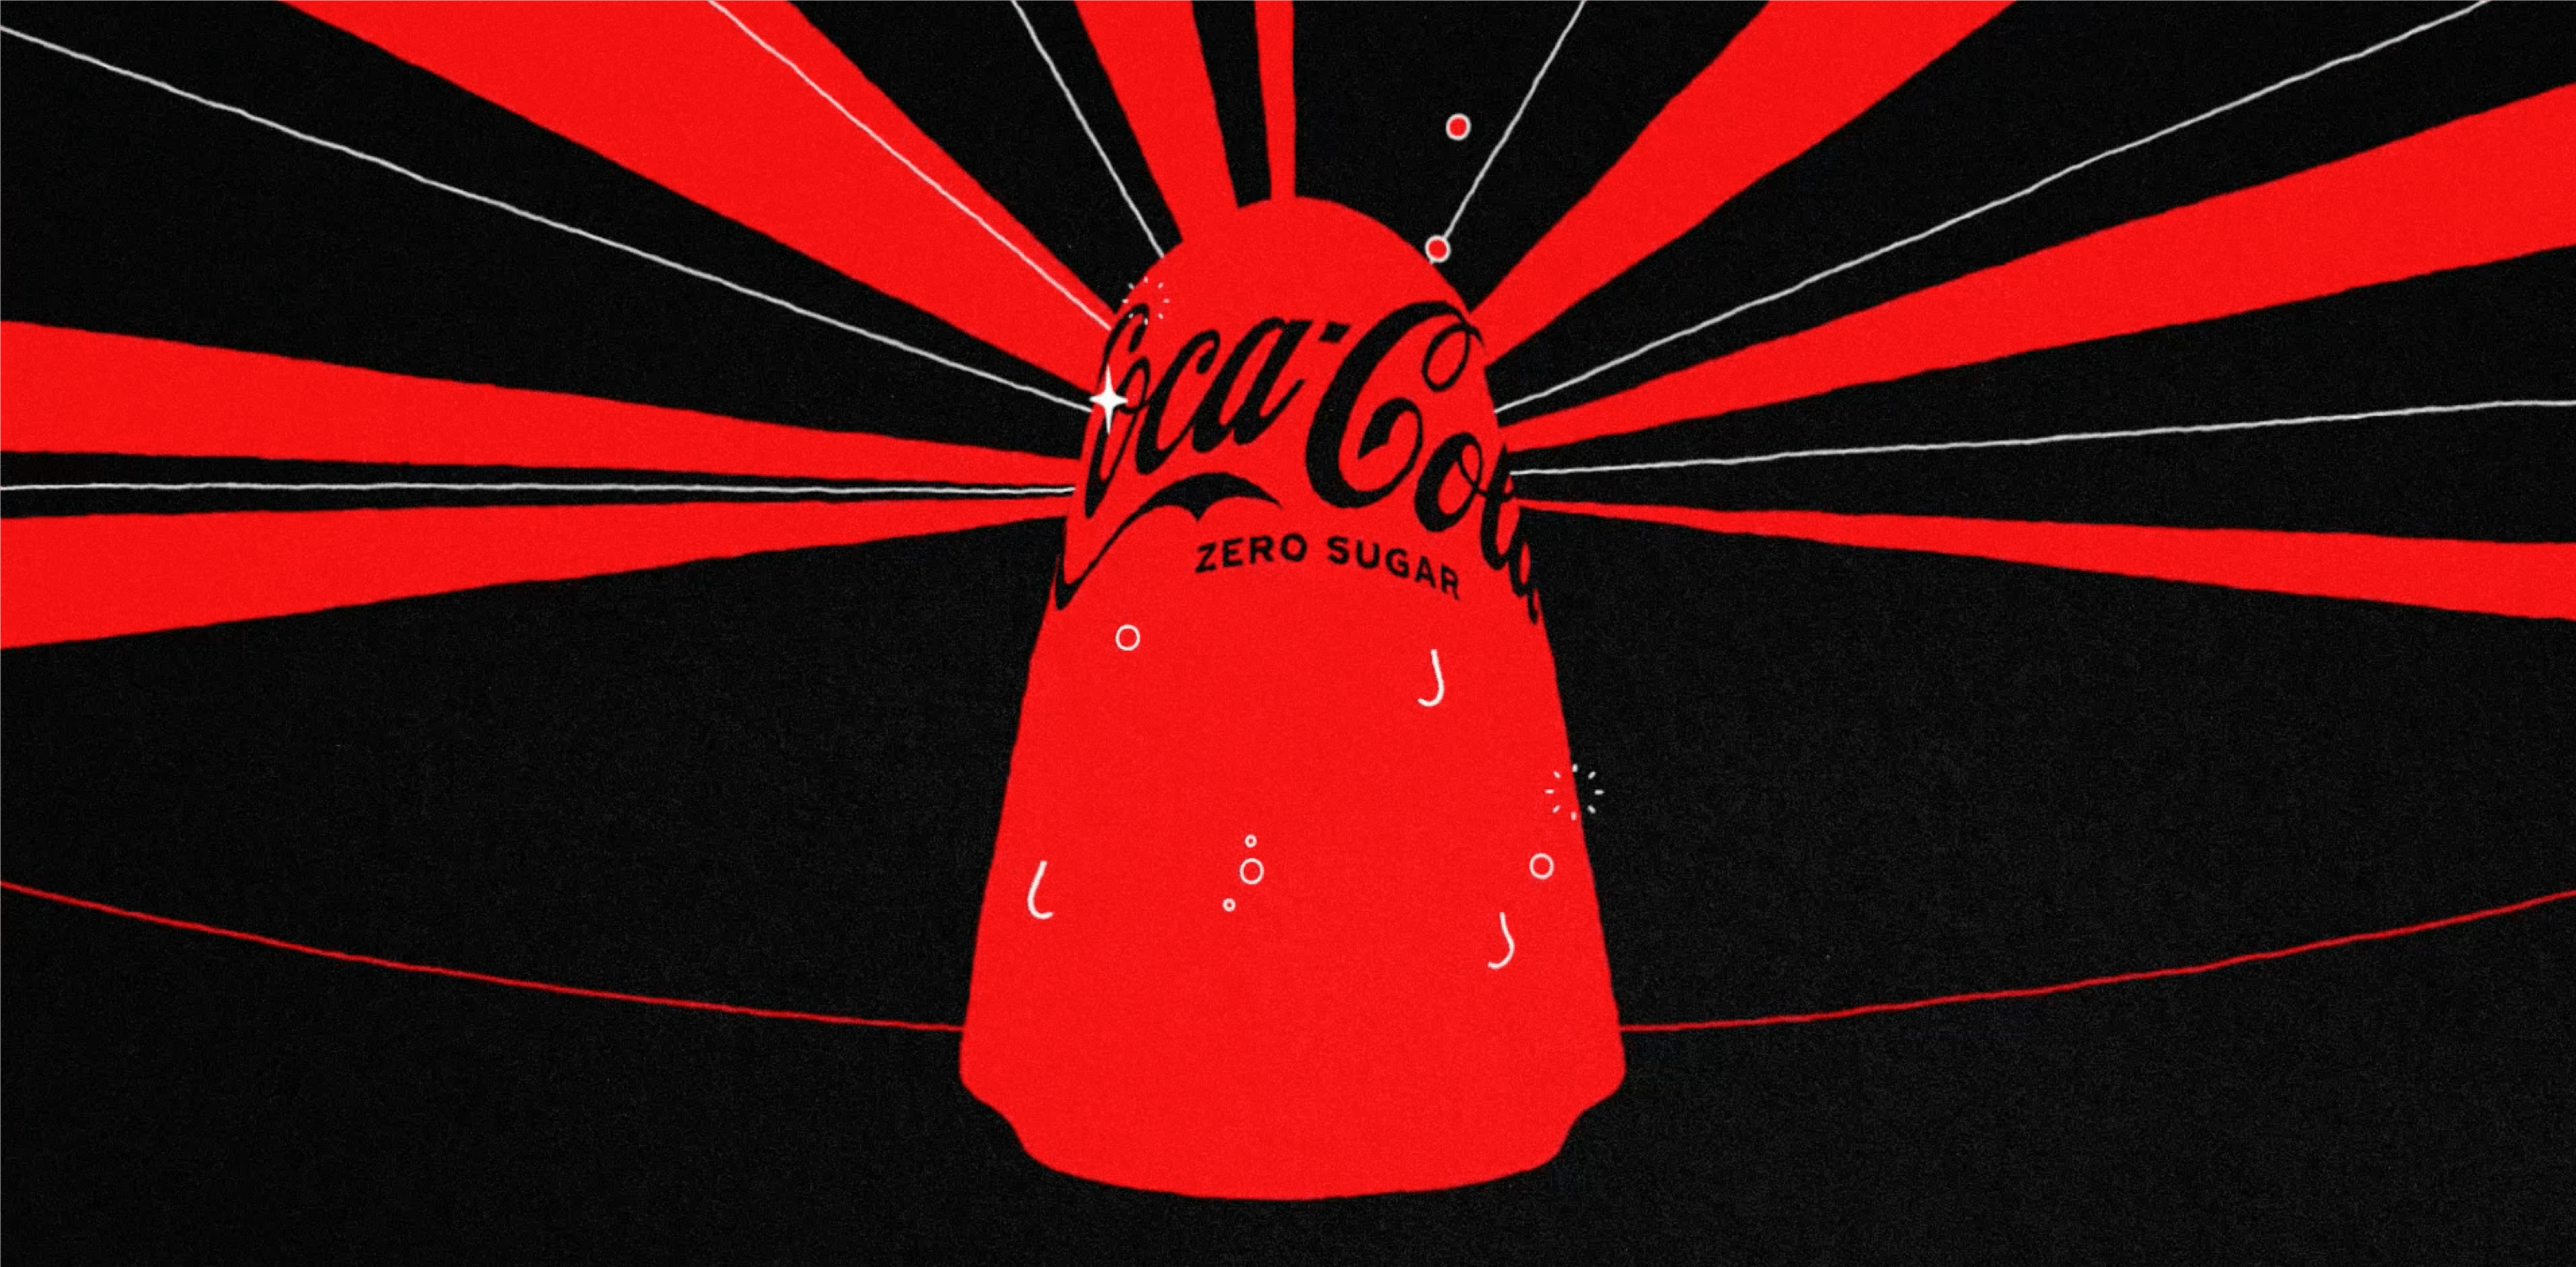 Coca-Cola - #TAKEATASTE